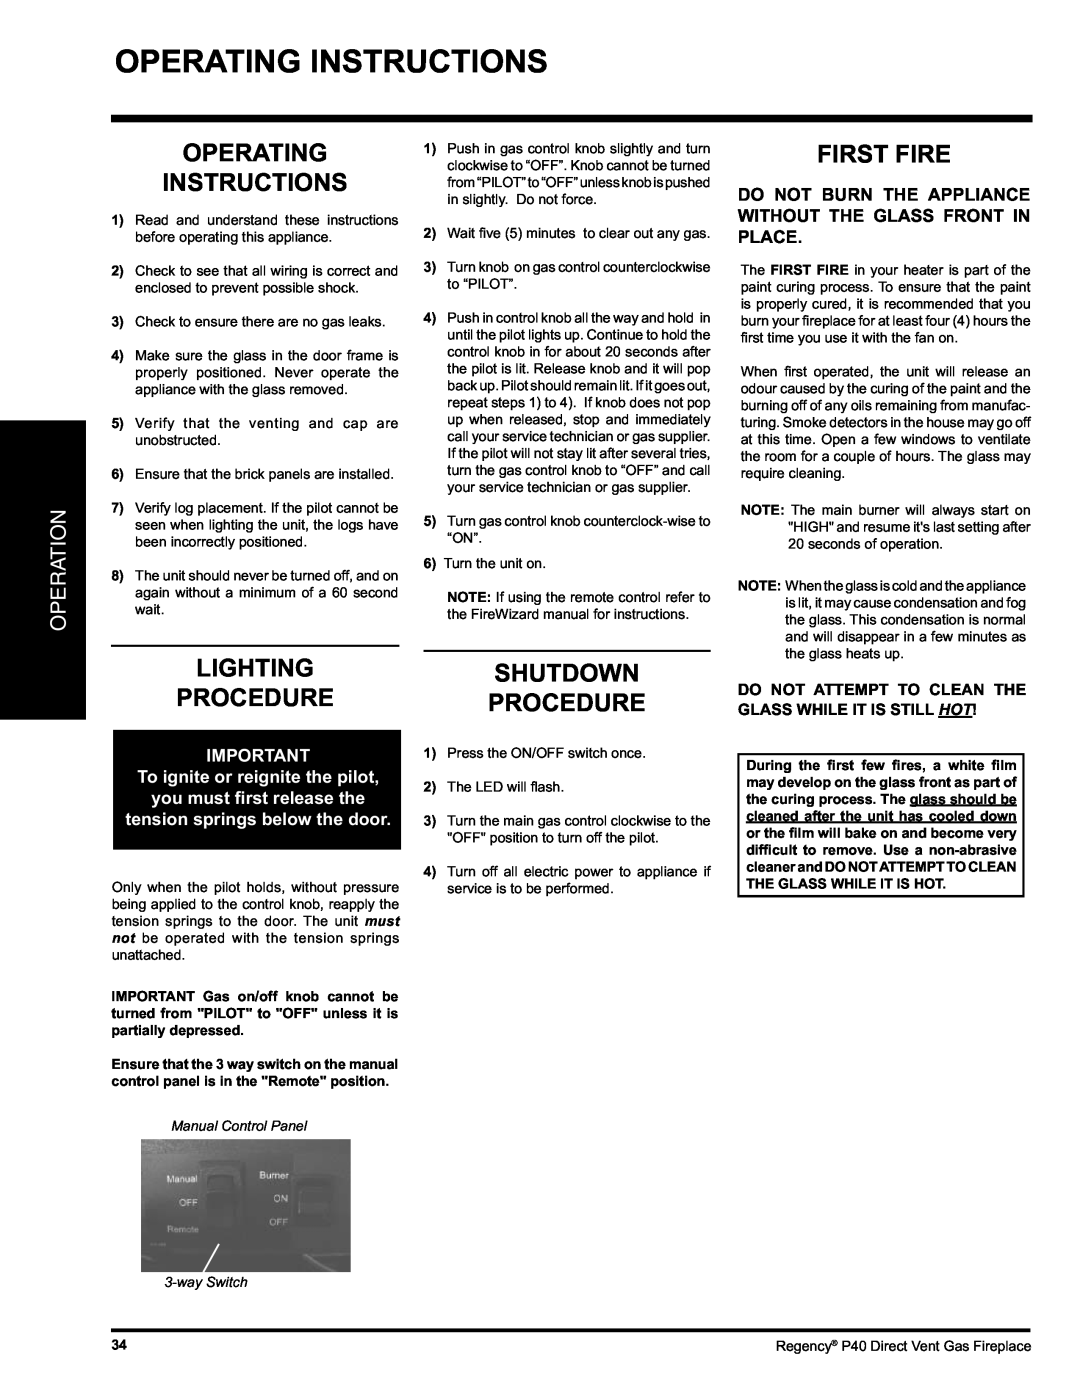 Regency P40-LP, P40-NG Operating Instructions, First Fire, Lightingshutdown Procedure Procedure, Operation 